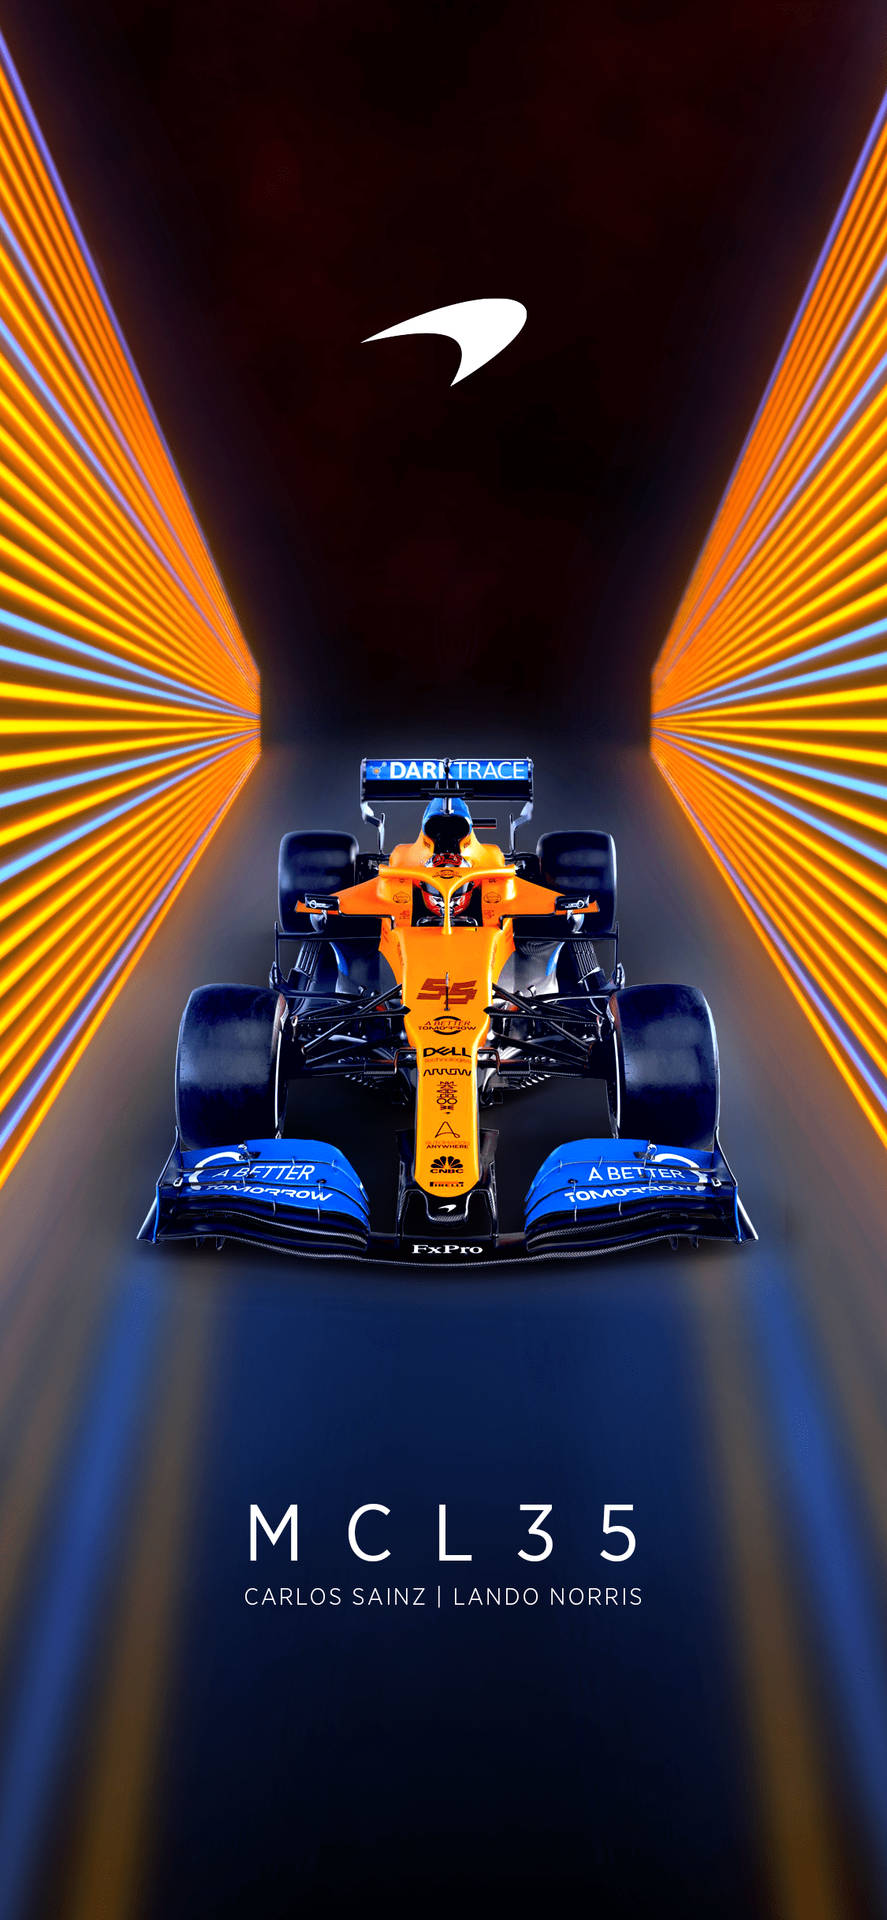 F1 Mcl 35 Orange Lights Iphone Wallpaper